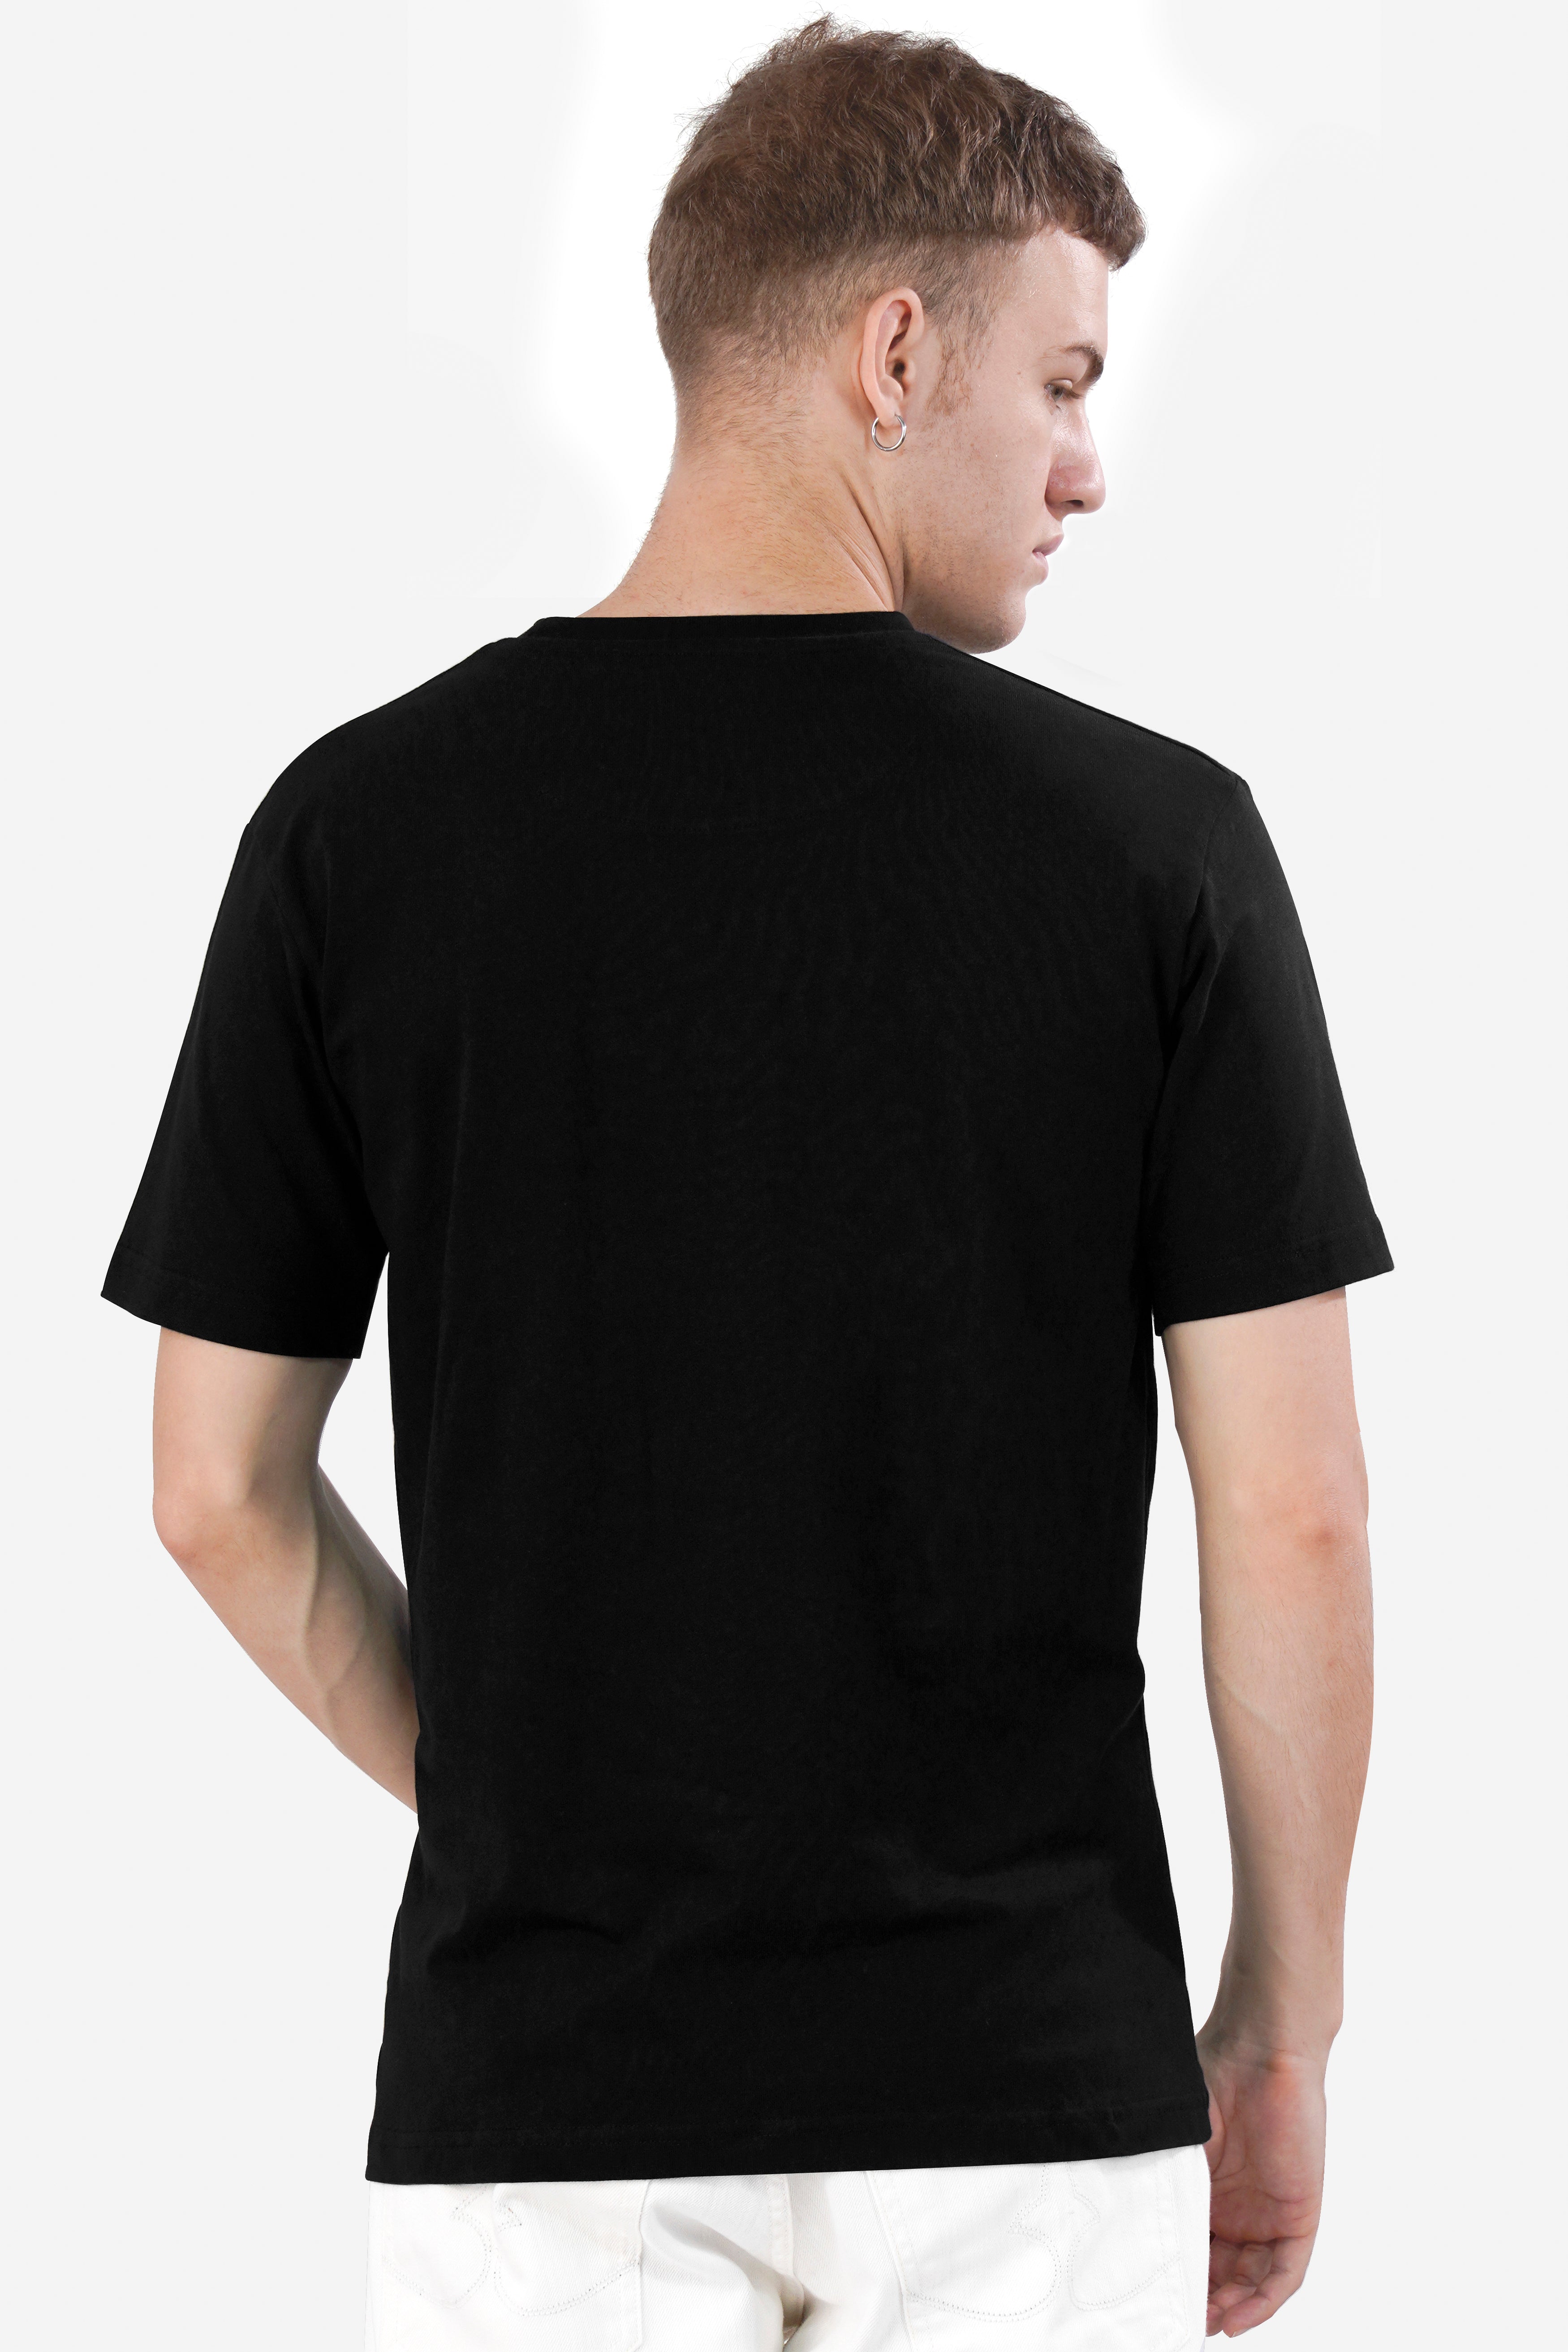 Jade Black Premium Cotton T-shirt TS952-S, TS952-M, TS952-L, TS952-XL, TS952-XXL